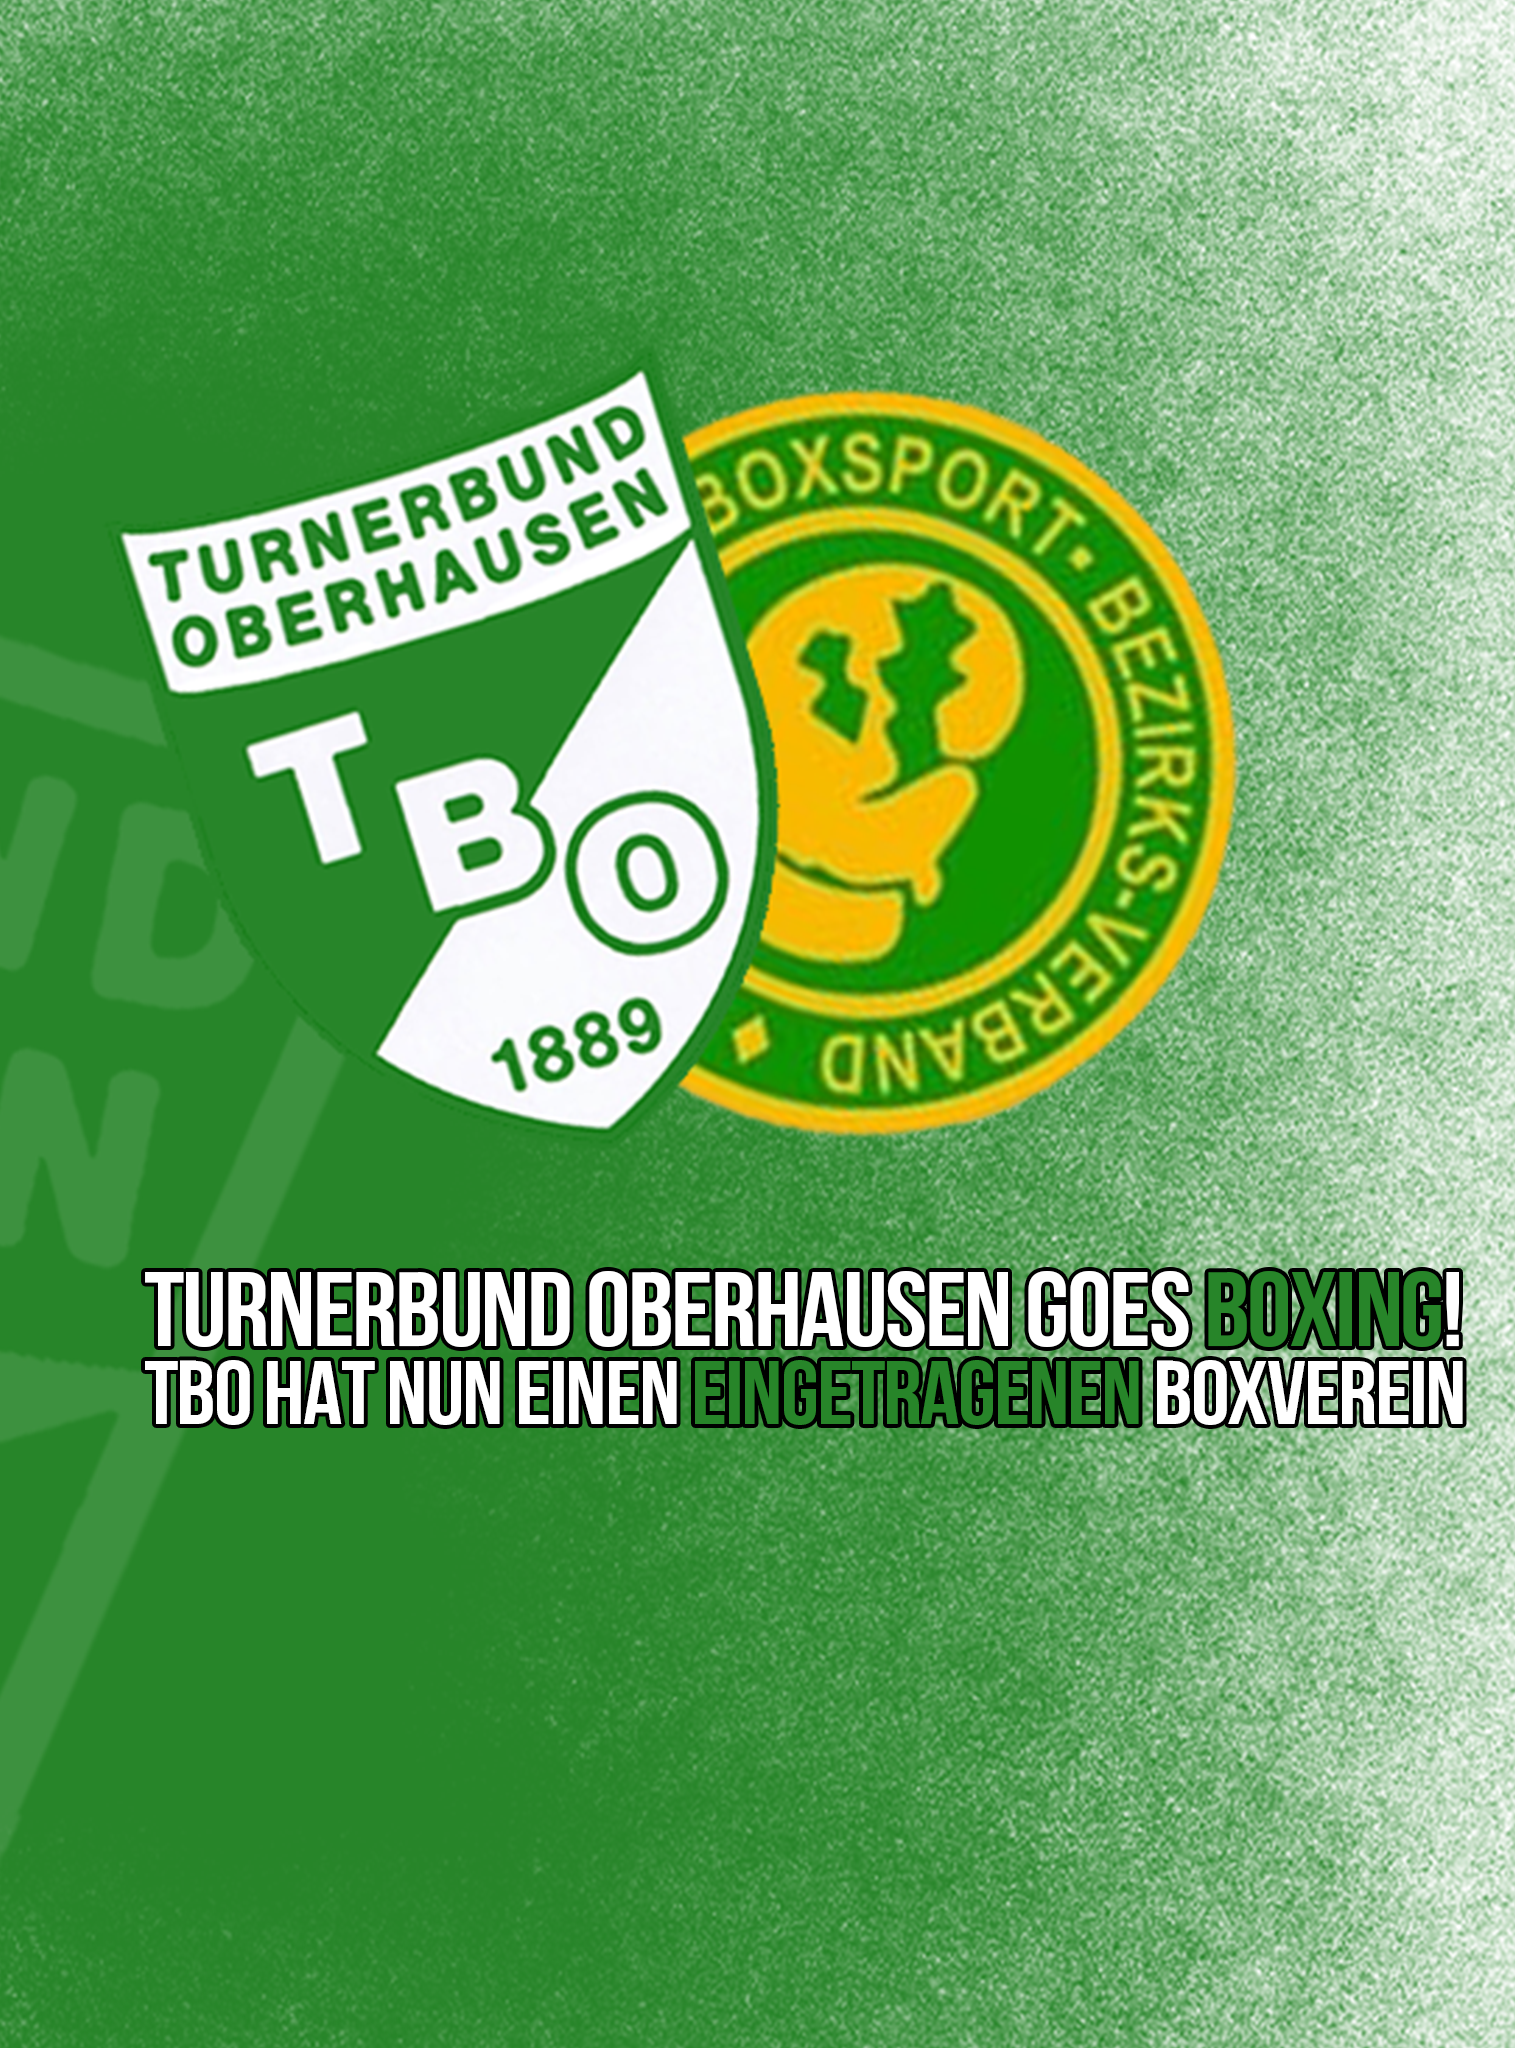 Turnerbund Oberhausen goes Boxing!